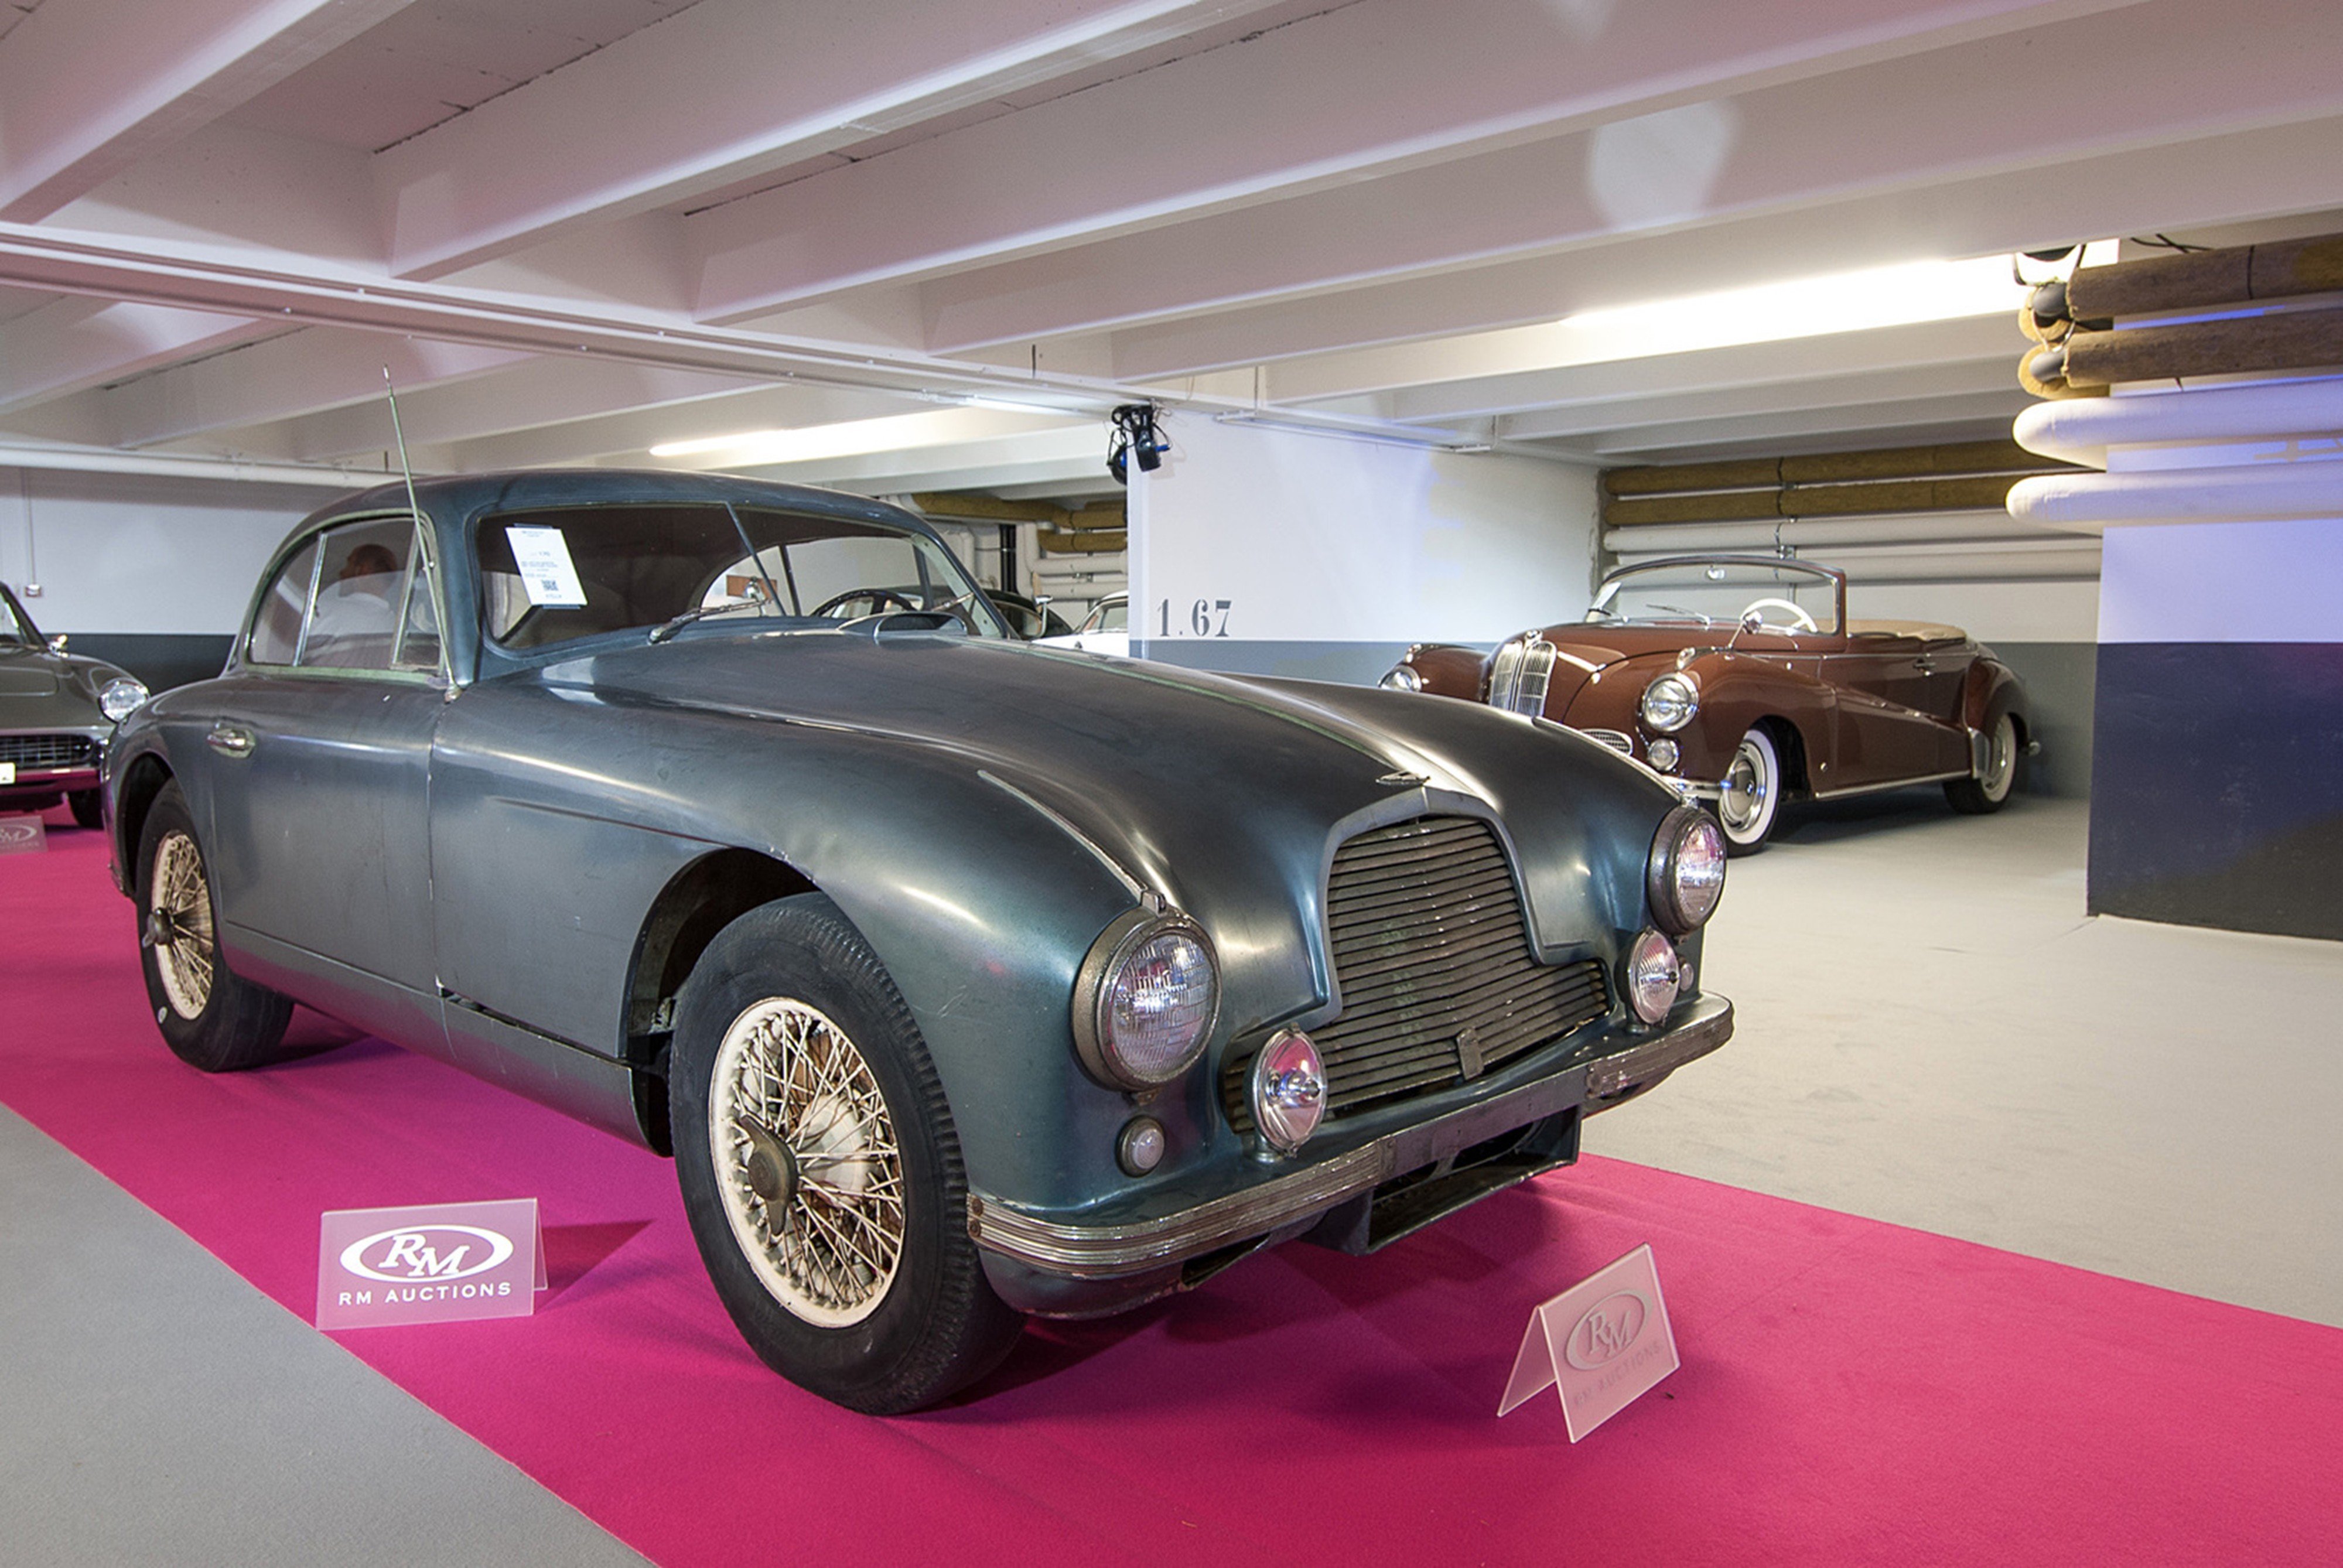 rmand039s, Auction, In, Monaco, Classic, Car, 1953, Aston, Martin, Db2, Vantage, Coupa Wallpaper